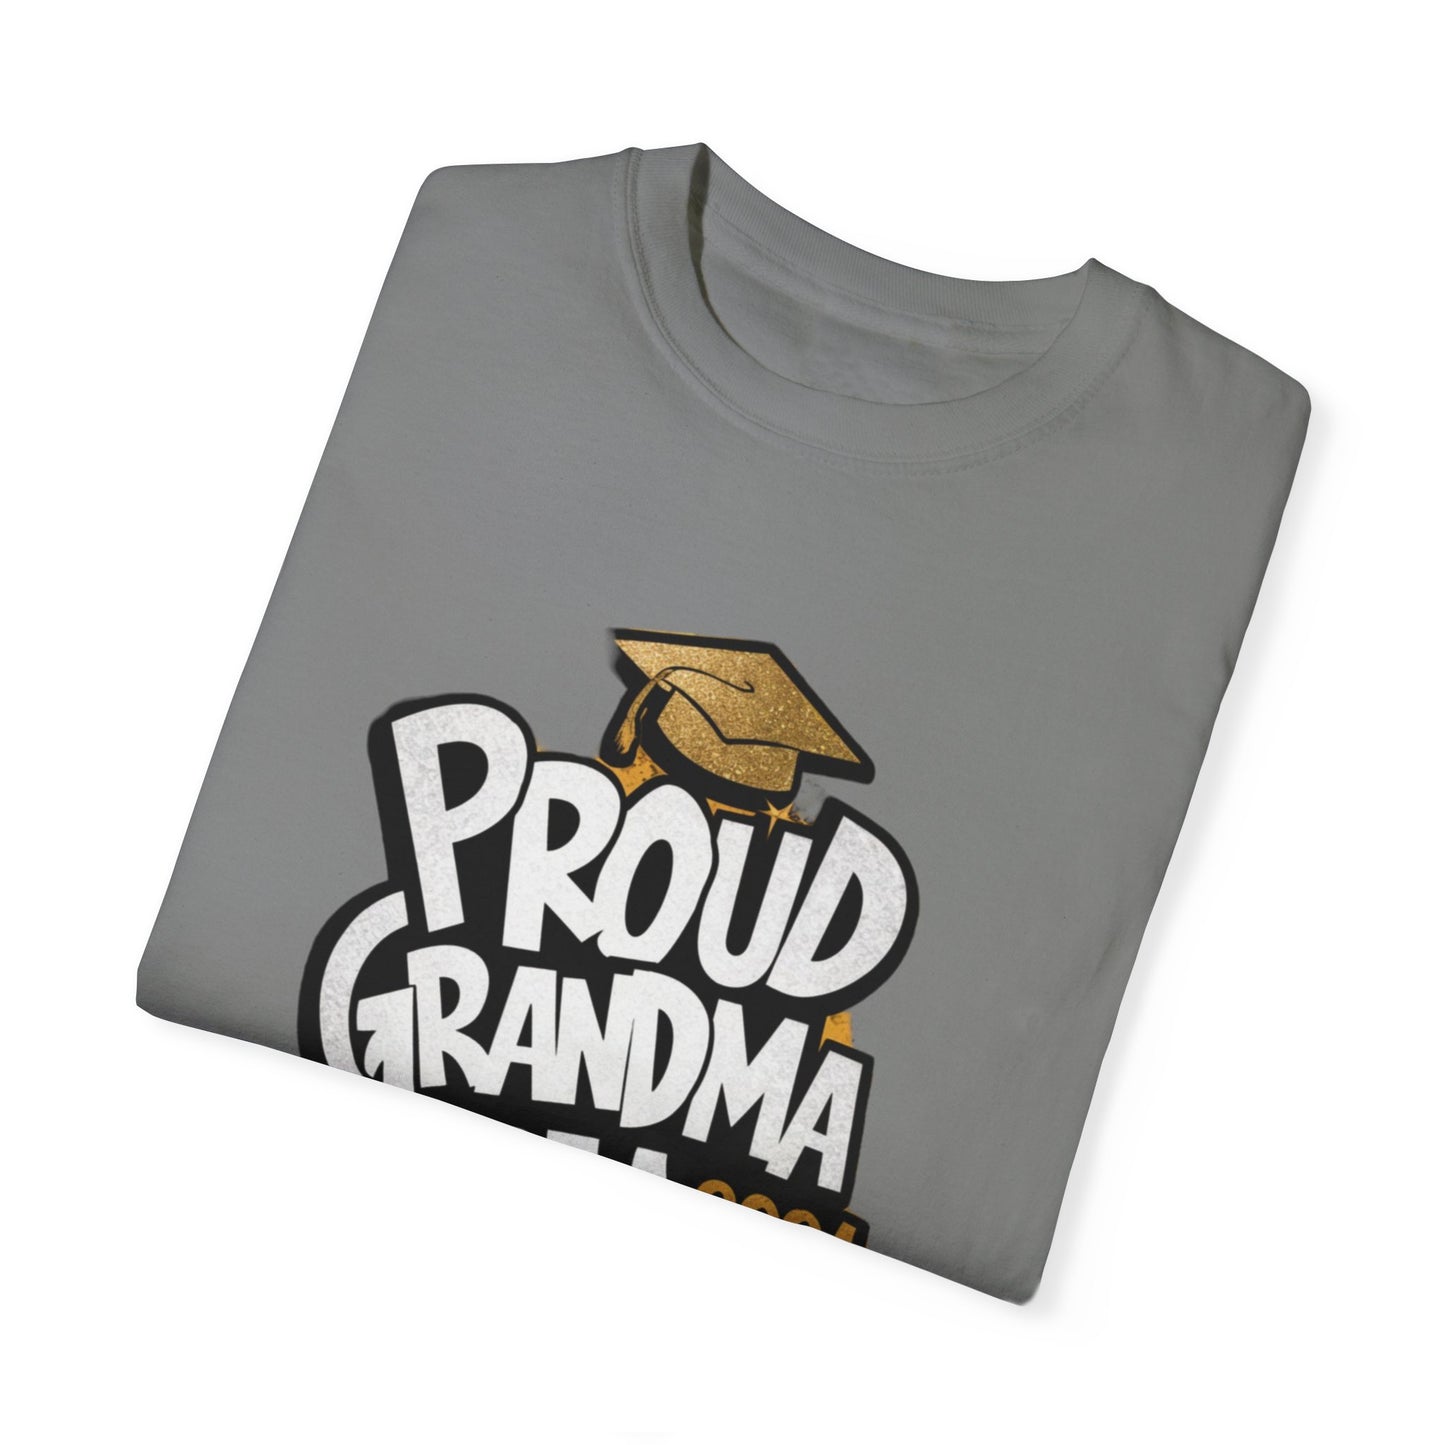 Proud of Grandma 2024 Graduate Unisex Garment-dyed T-shirt Cotton Funny Humorous Graphic Soft Premium Unisex Men Women Grey T-shirt Birthday Gift-41